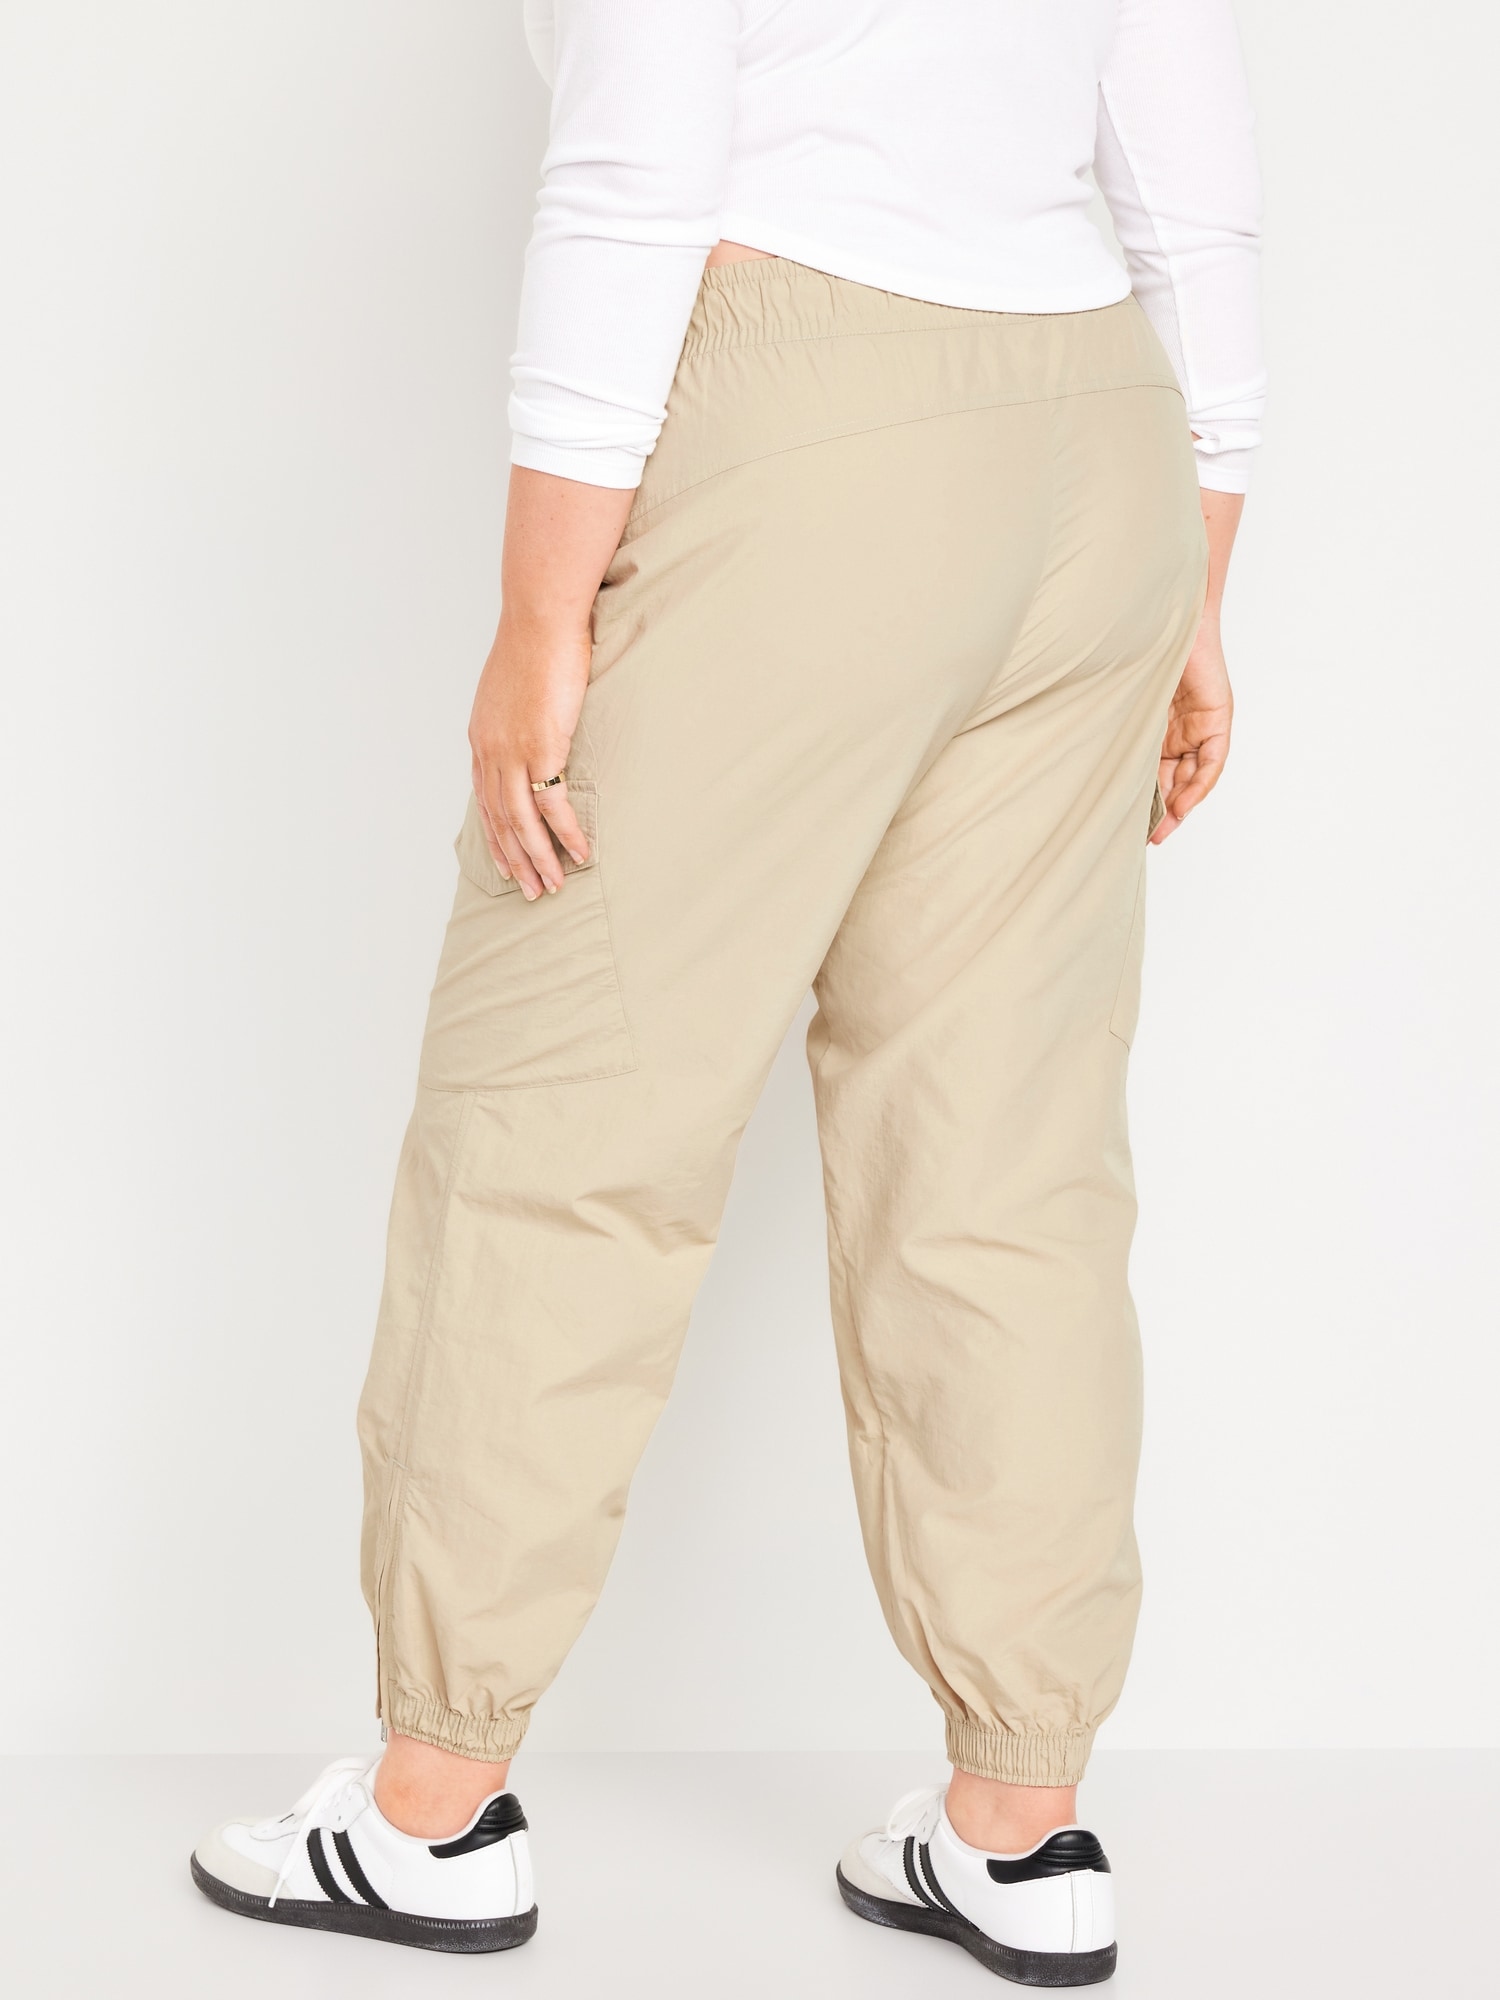 Womens Cargo Pants Pants Casual Zipper Fly High Waist Khaki S 